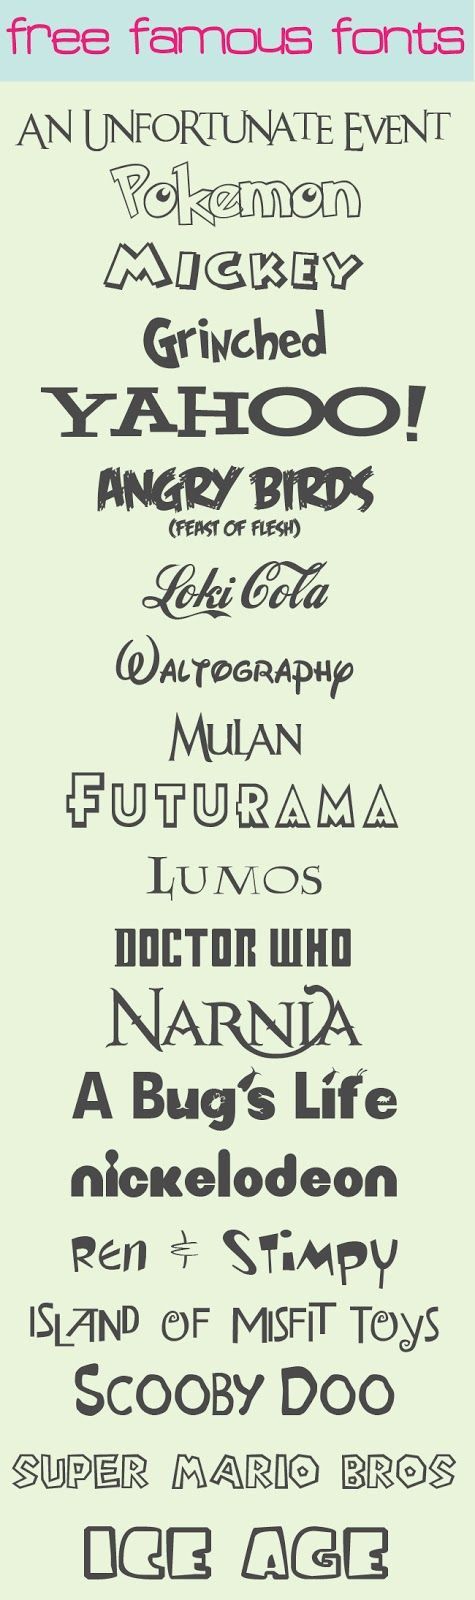 Free Famous Fonts